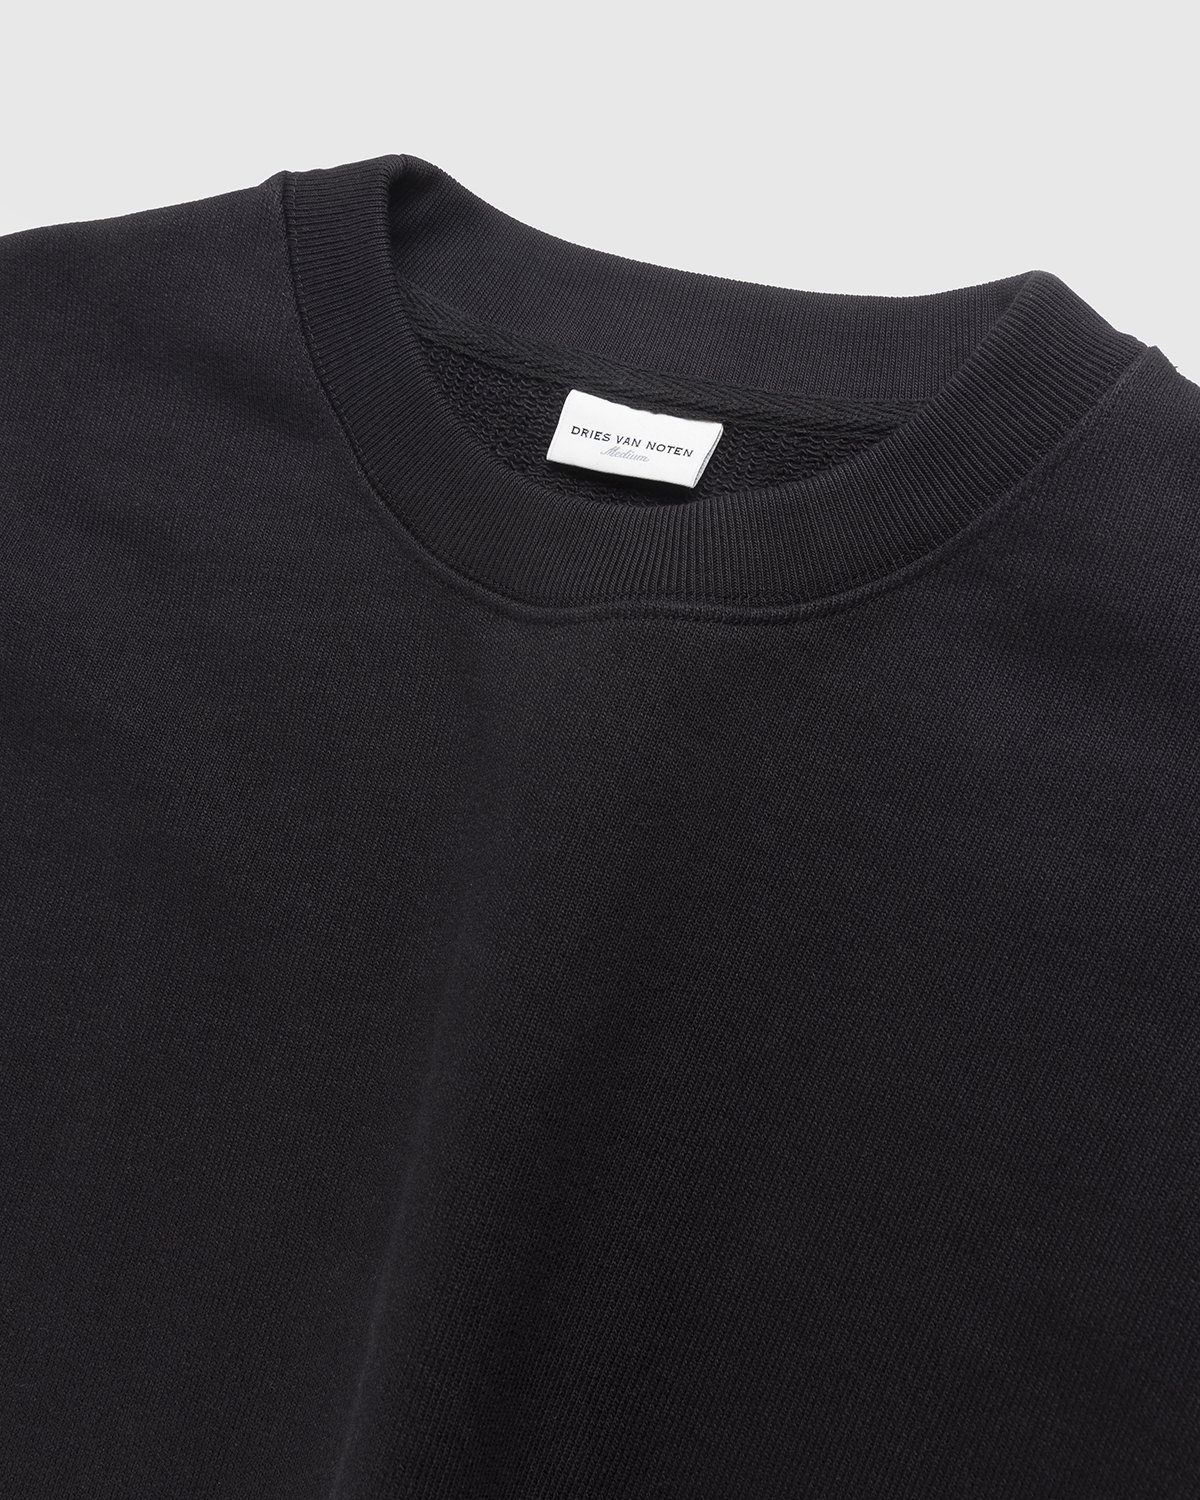 Dries van Noten - Haf Crewneck Sweater Black - Clothing - Black - Image 3